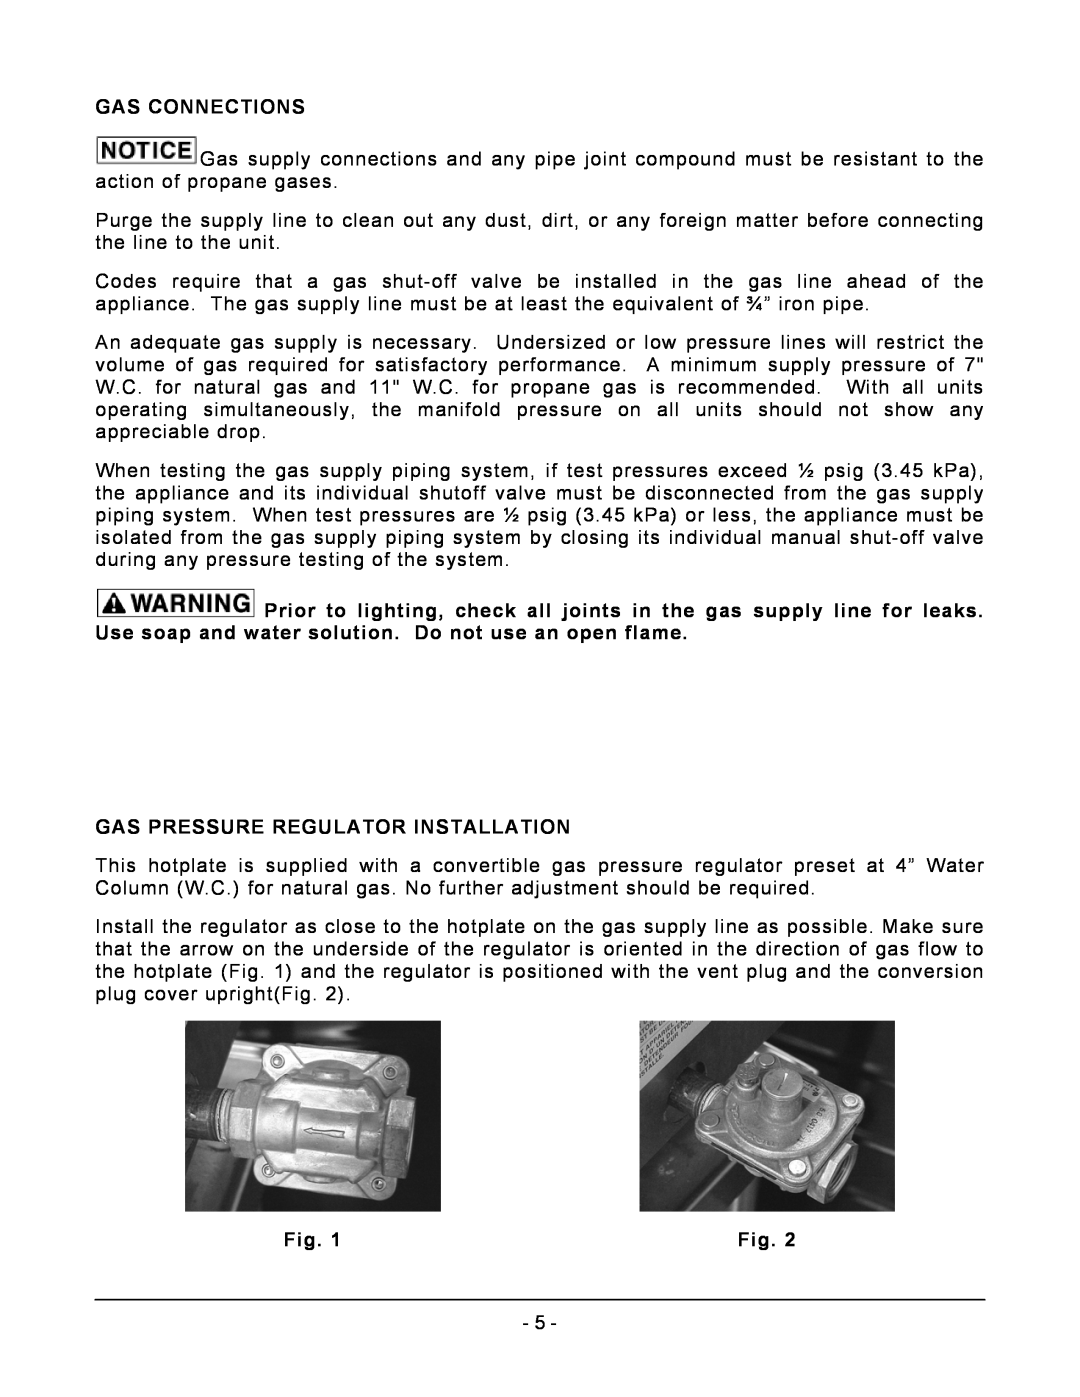 Vulcan-Hart VCRH12 operation manual Gas Connections, Gas Pressure Regulator Installation 